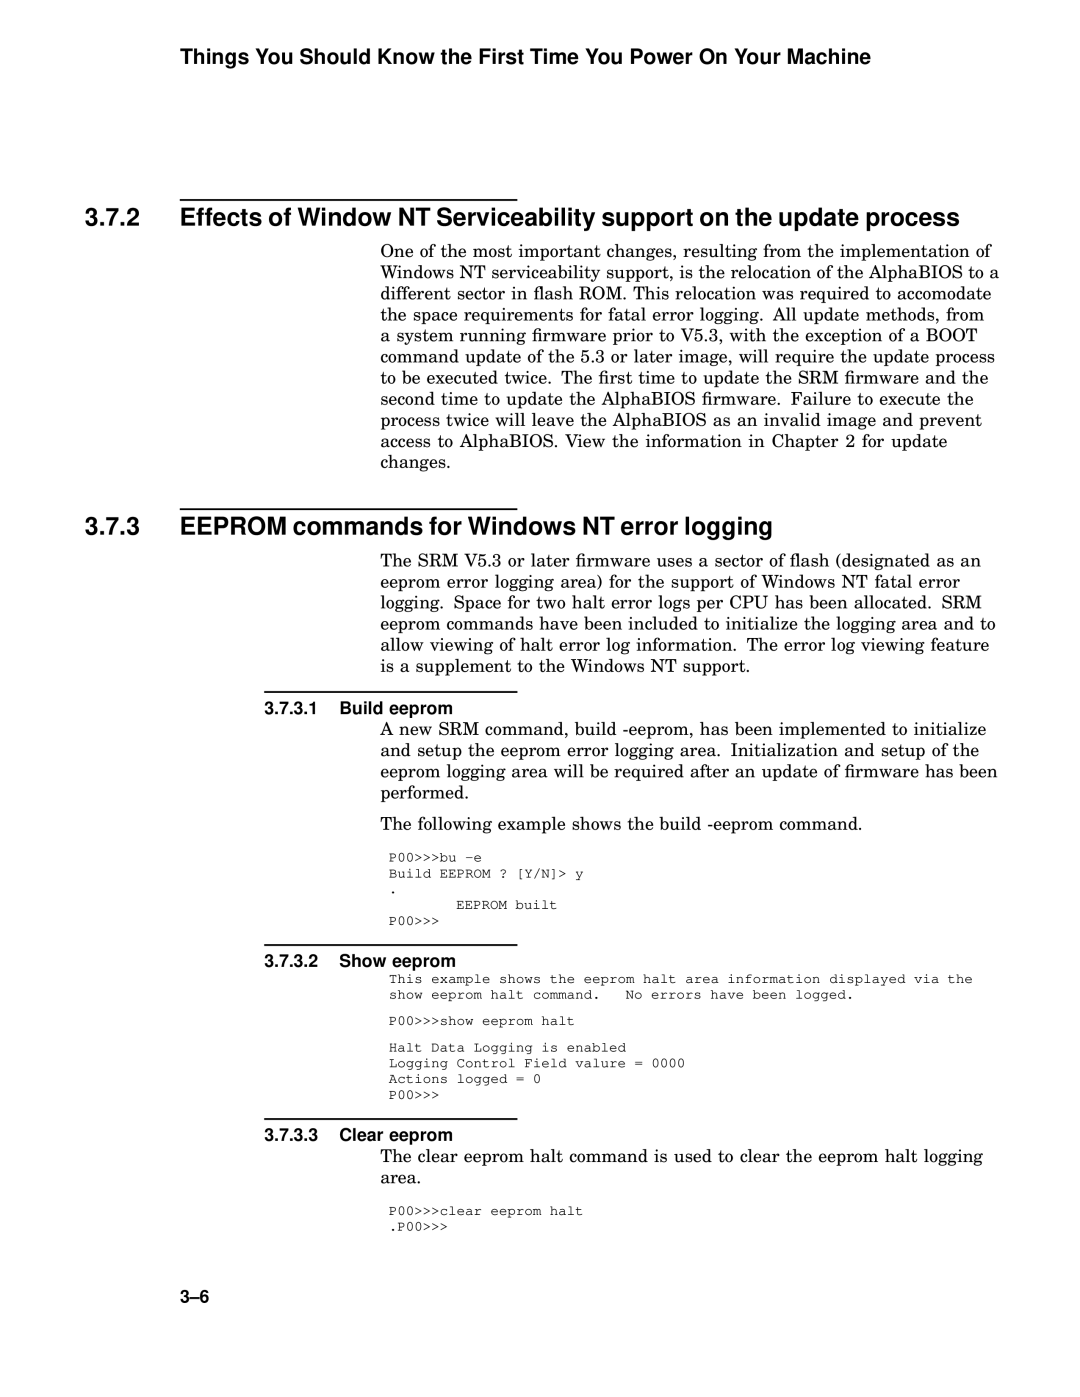 Compaq 4100 manual Eeprom commands for Windows NT error logging, Build eeprom 